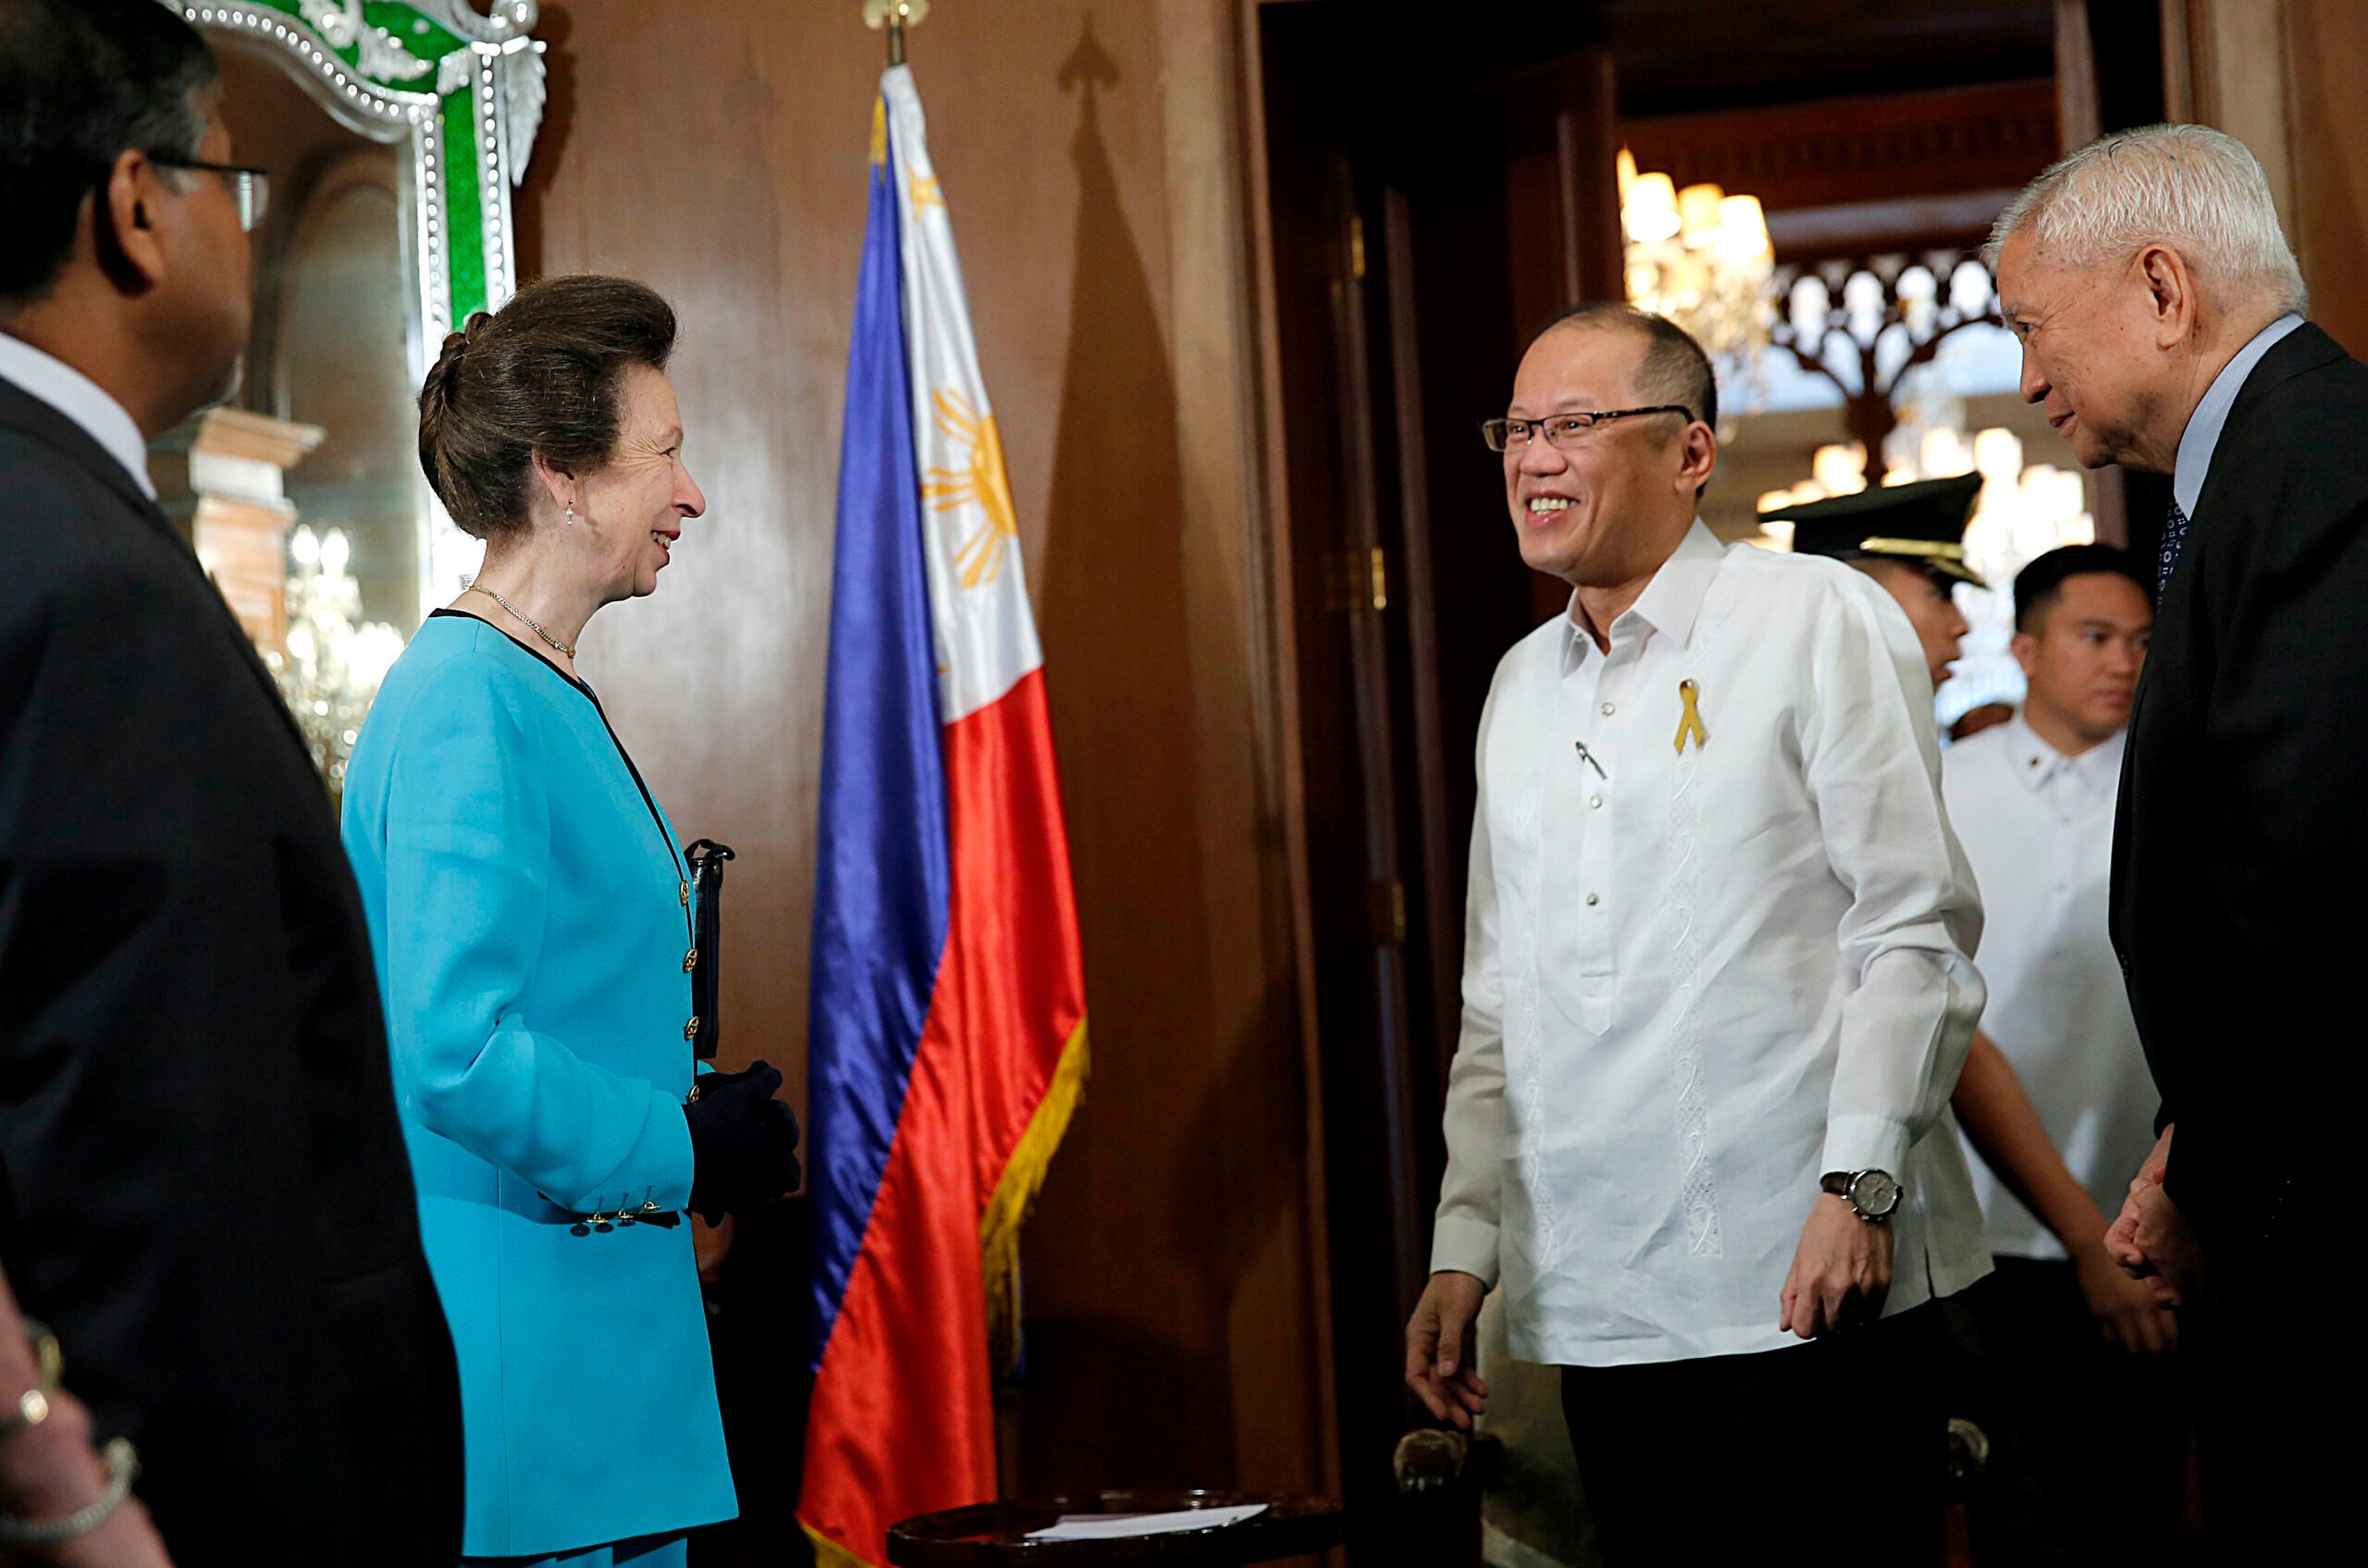 IN PHOTOS: Princess Anne visits Manila